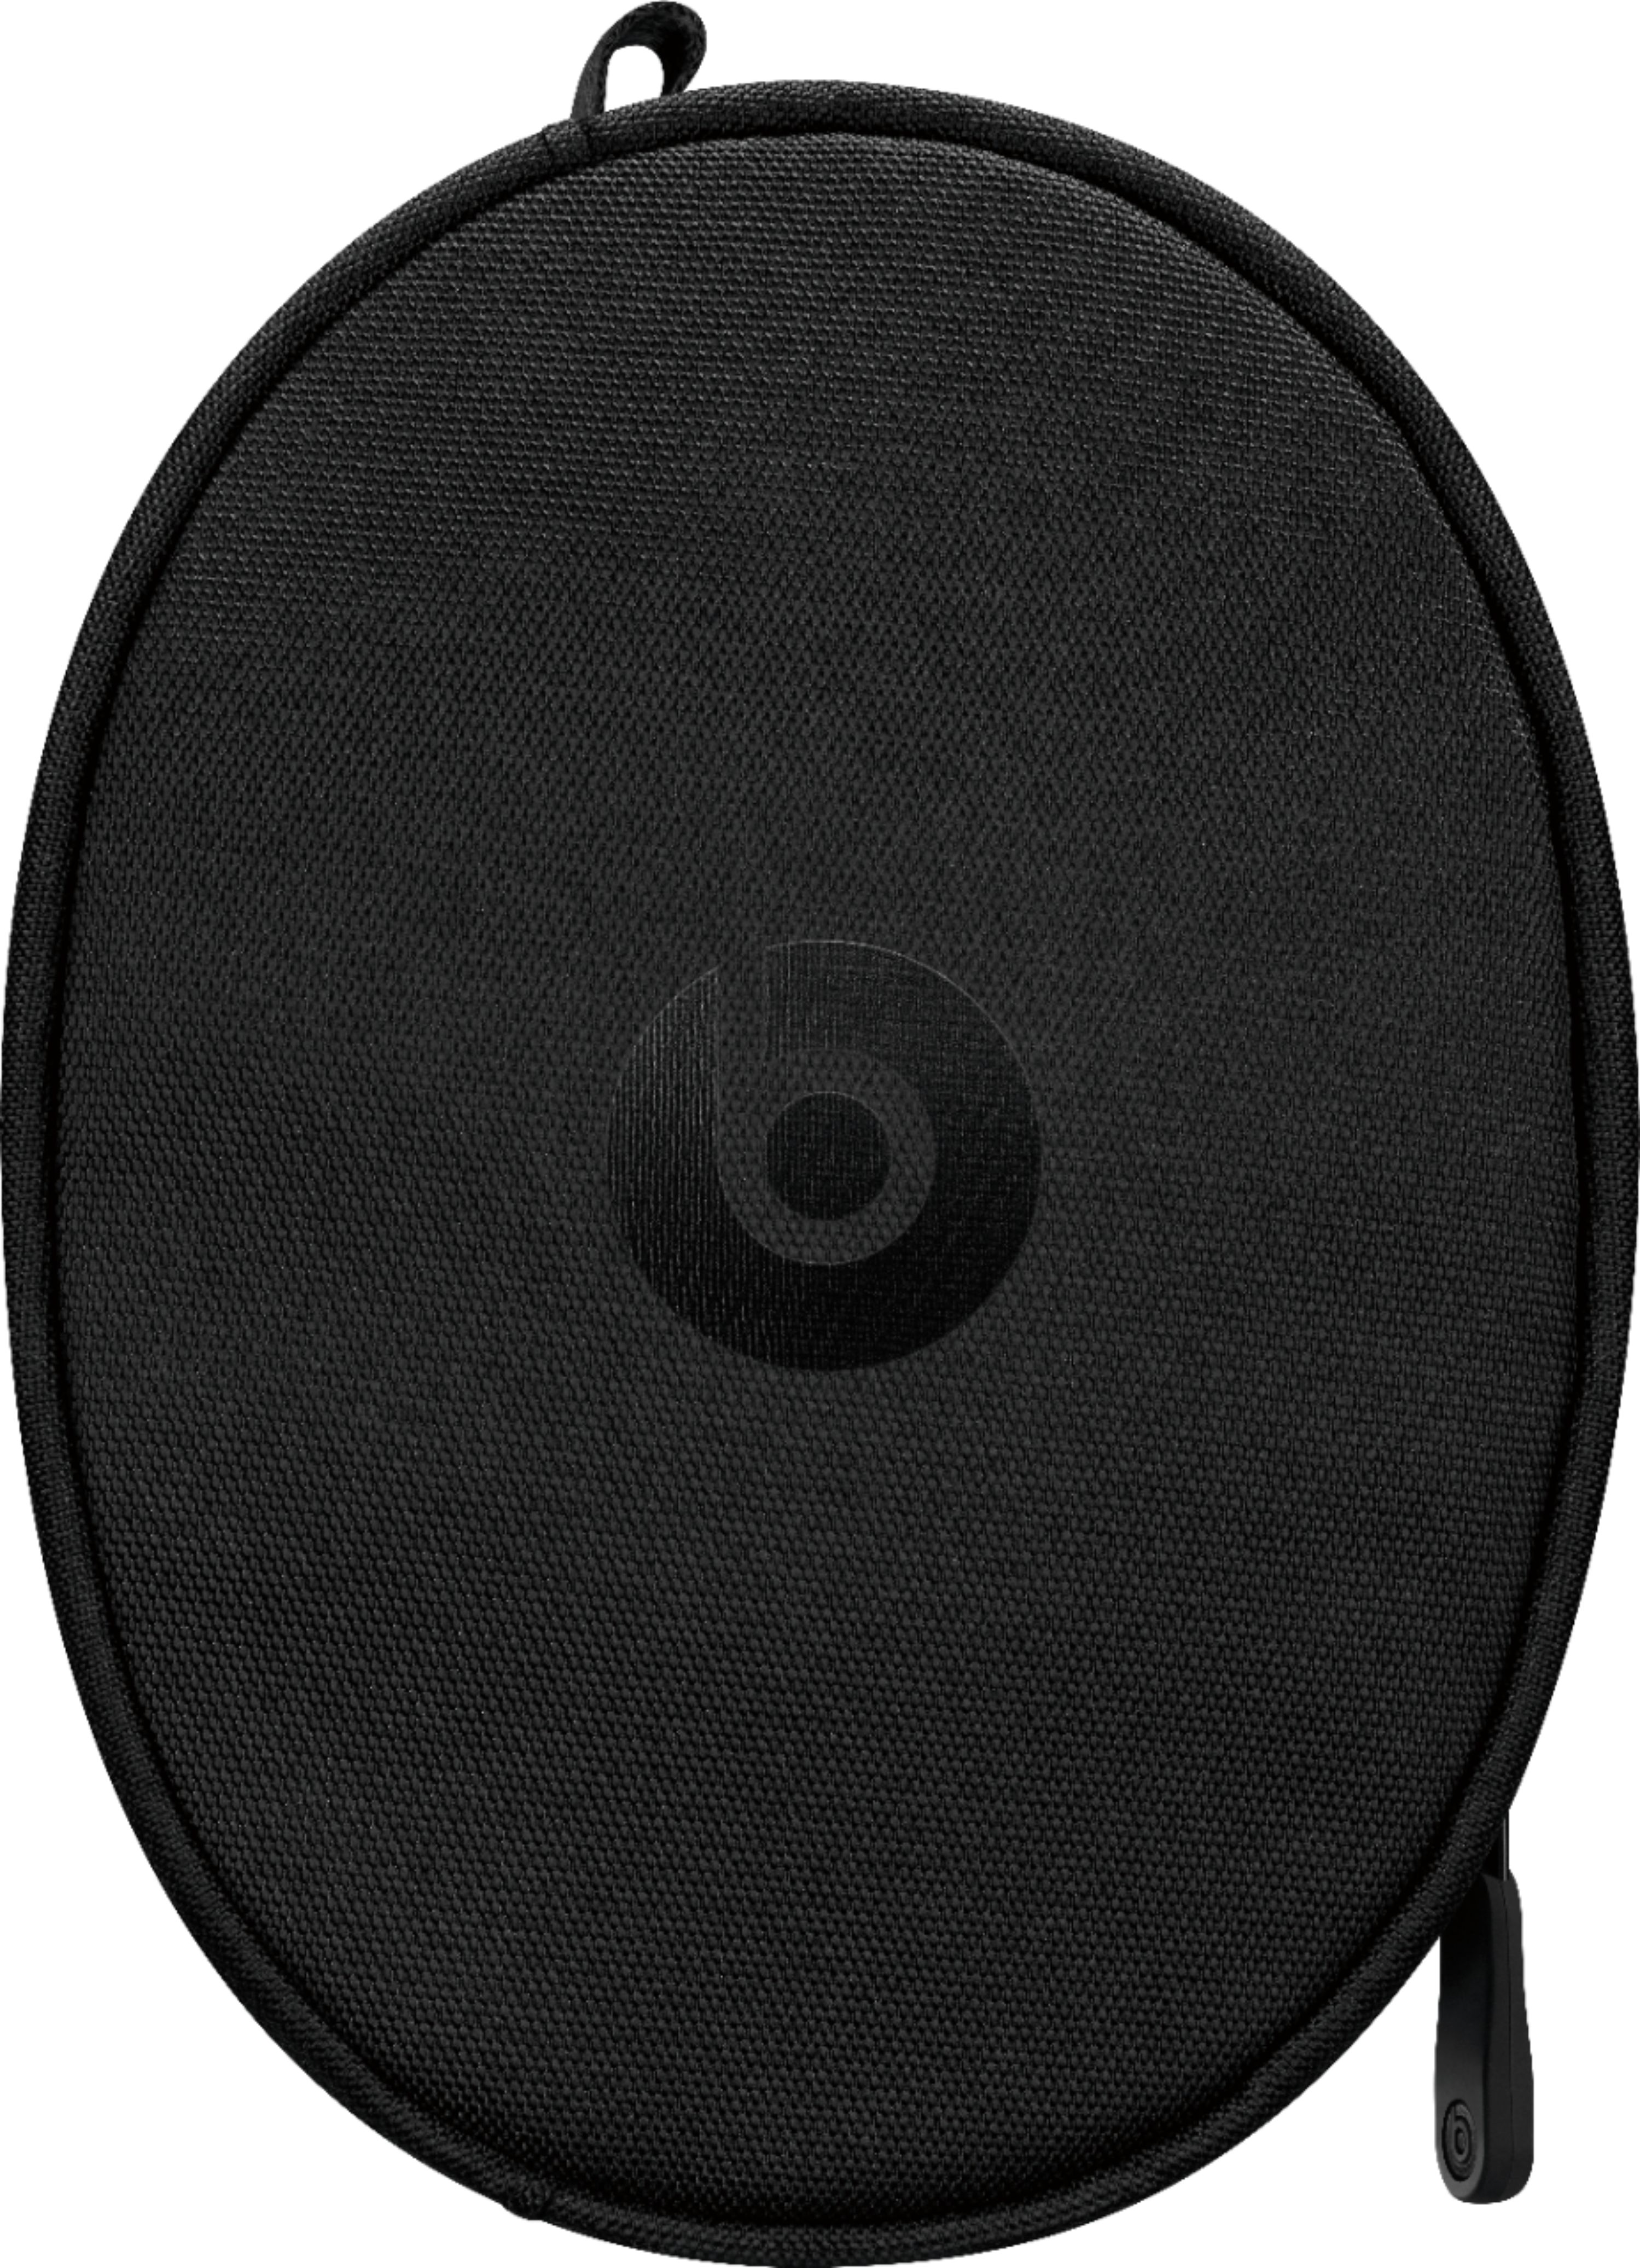 Beats Solo3 Wireless Headphones - Black - Apple